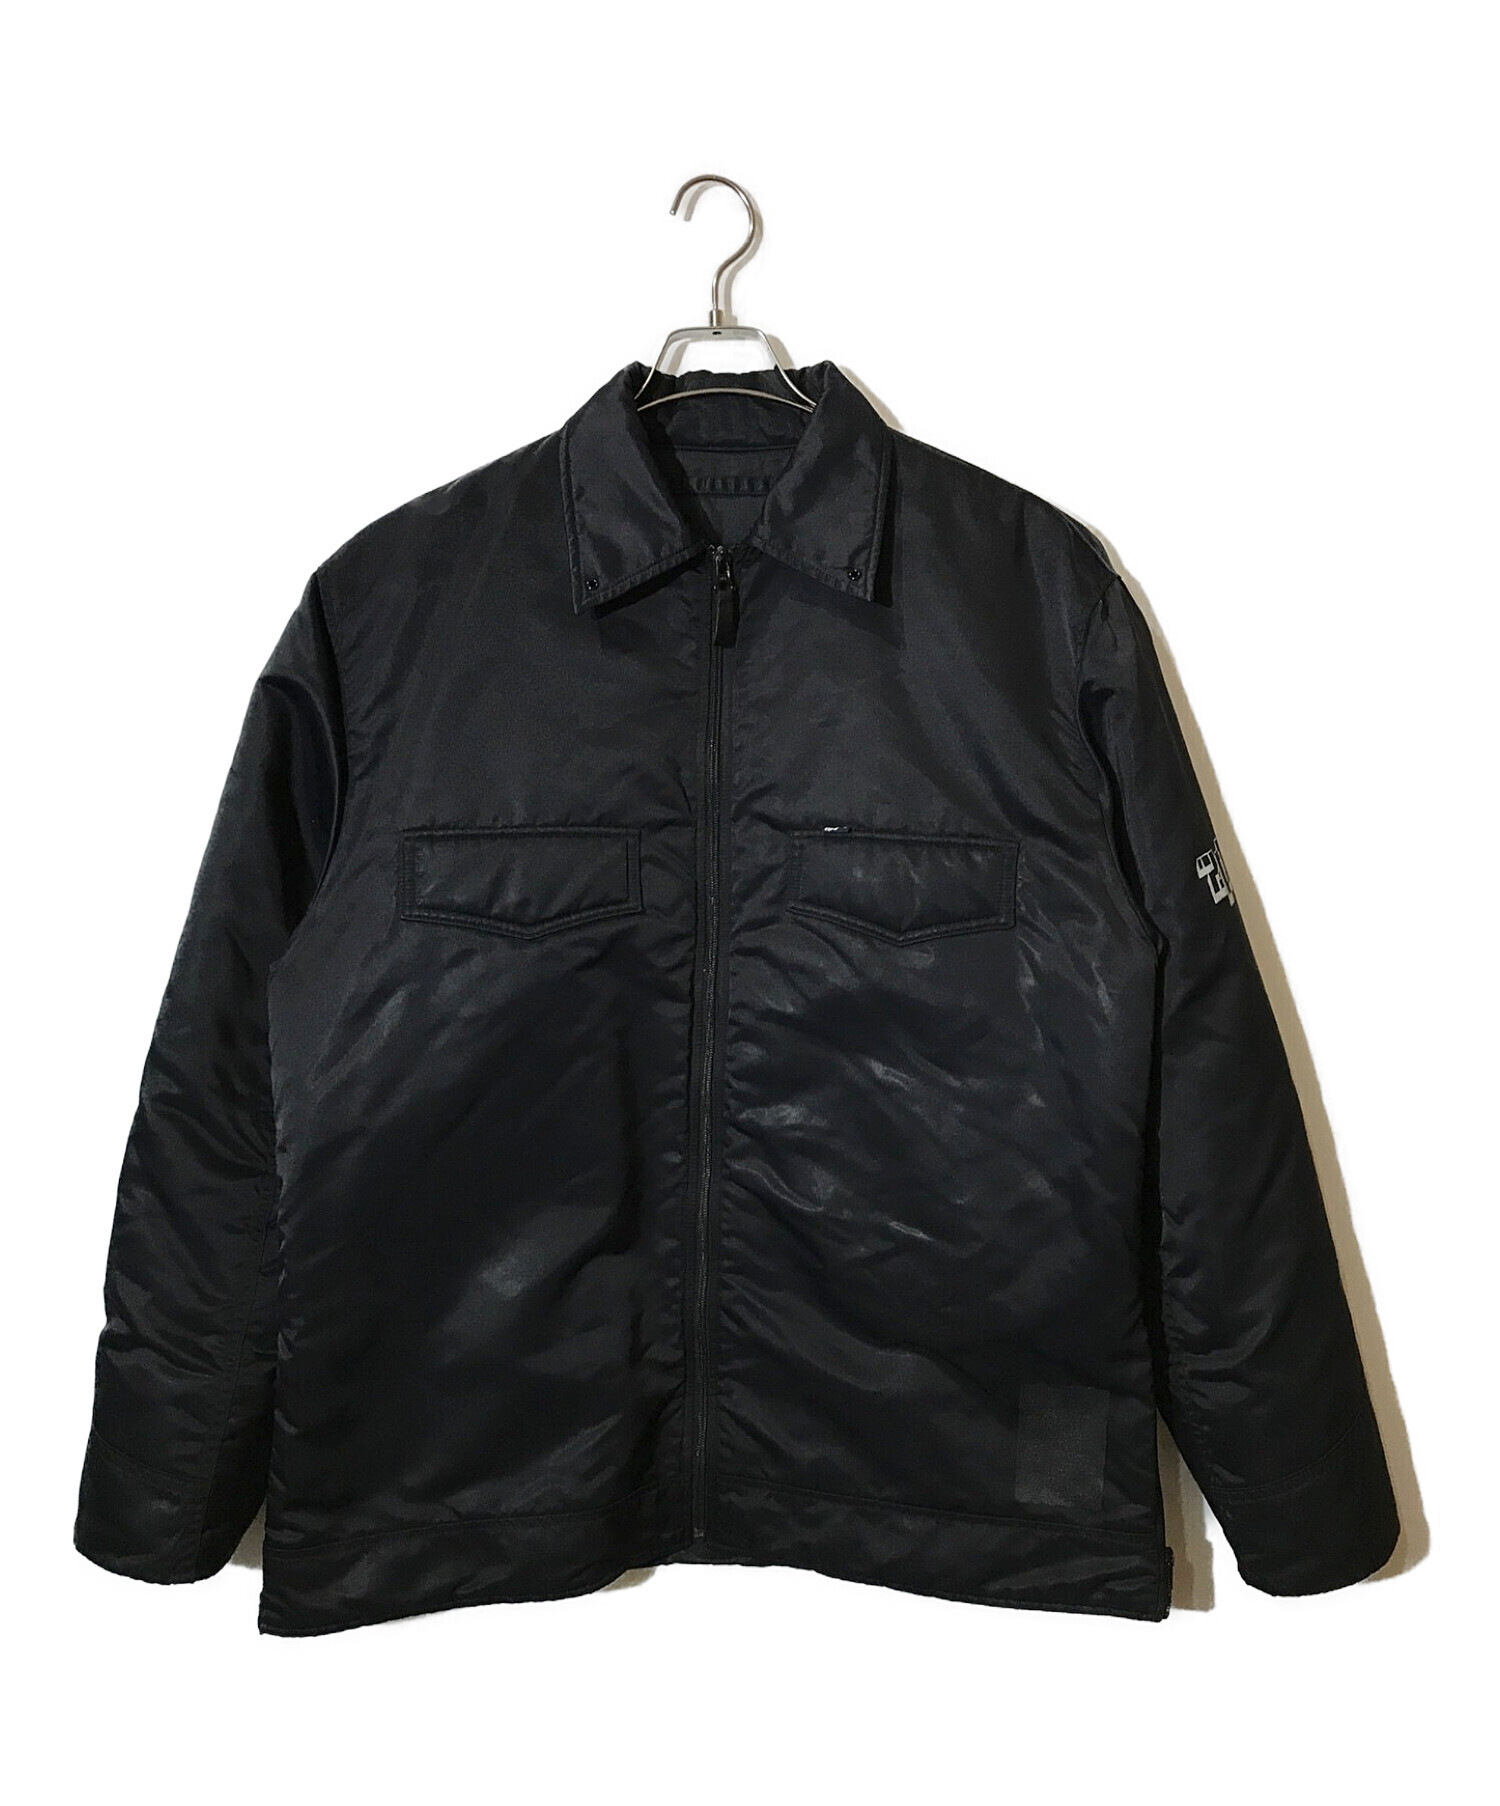 TENDERLOIN (テンダーロイン) ナイロンワークジャケット ネイビー サイズ:XL